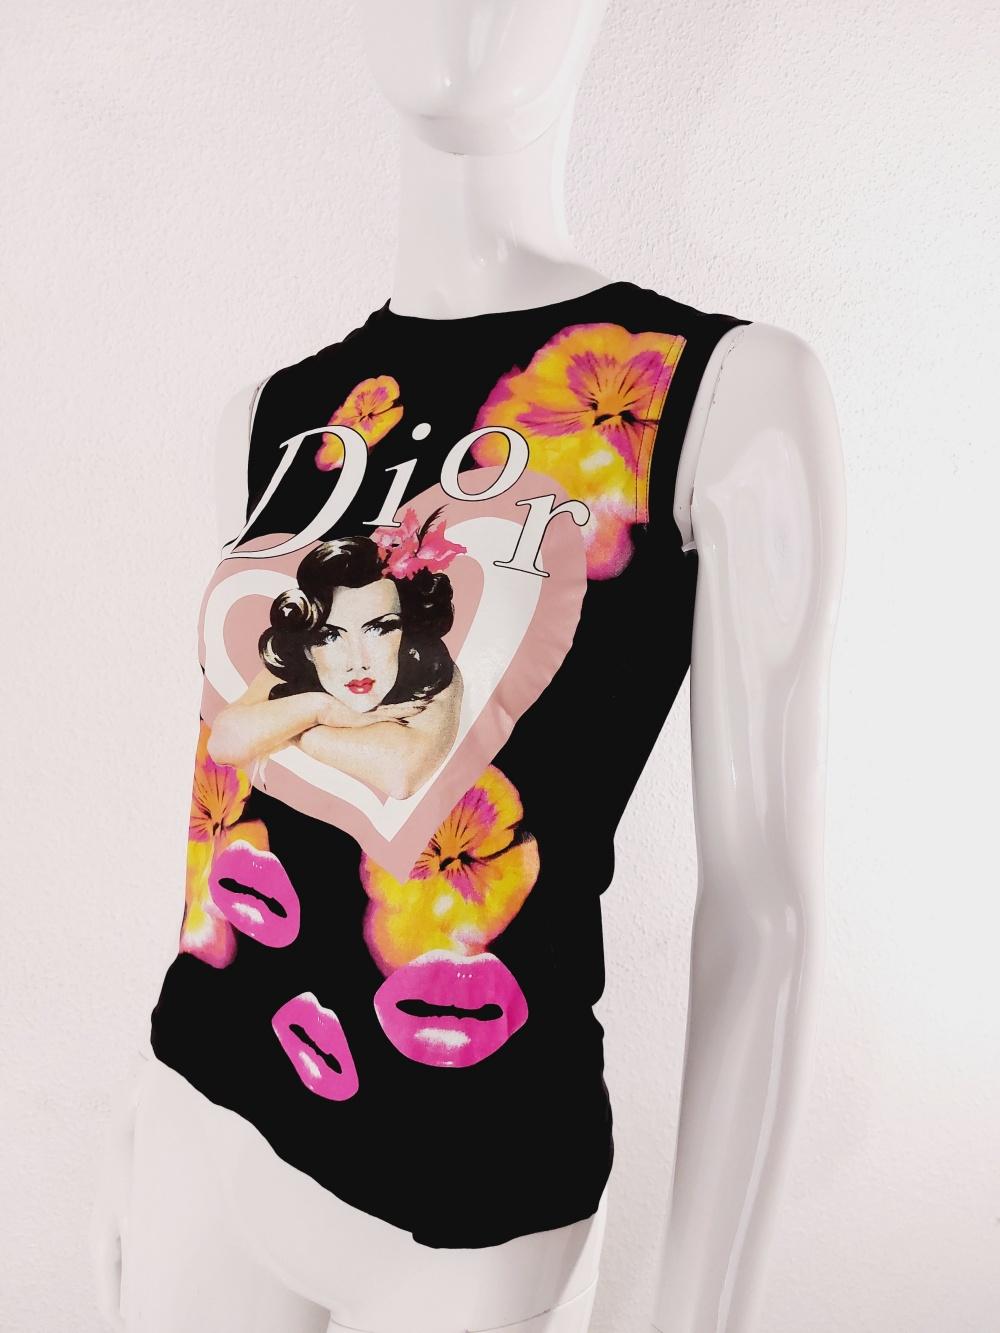 Christian Dior John Galliano 2005 Pop Art Portrait Lips Floral Heart Top T-Shirt 6